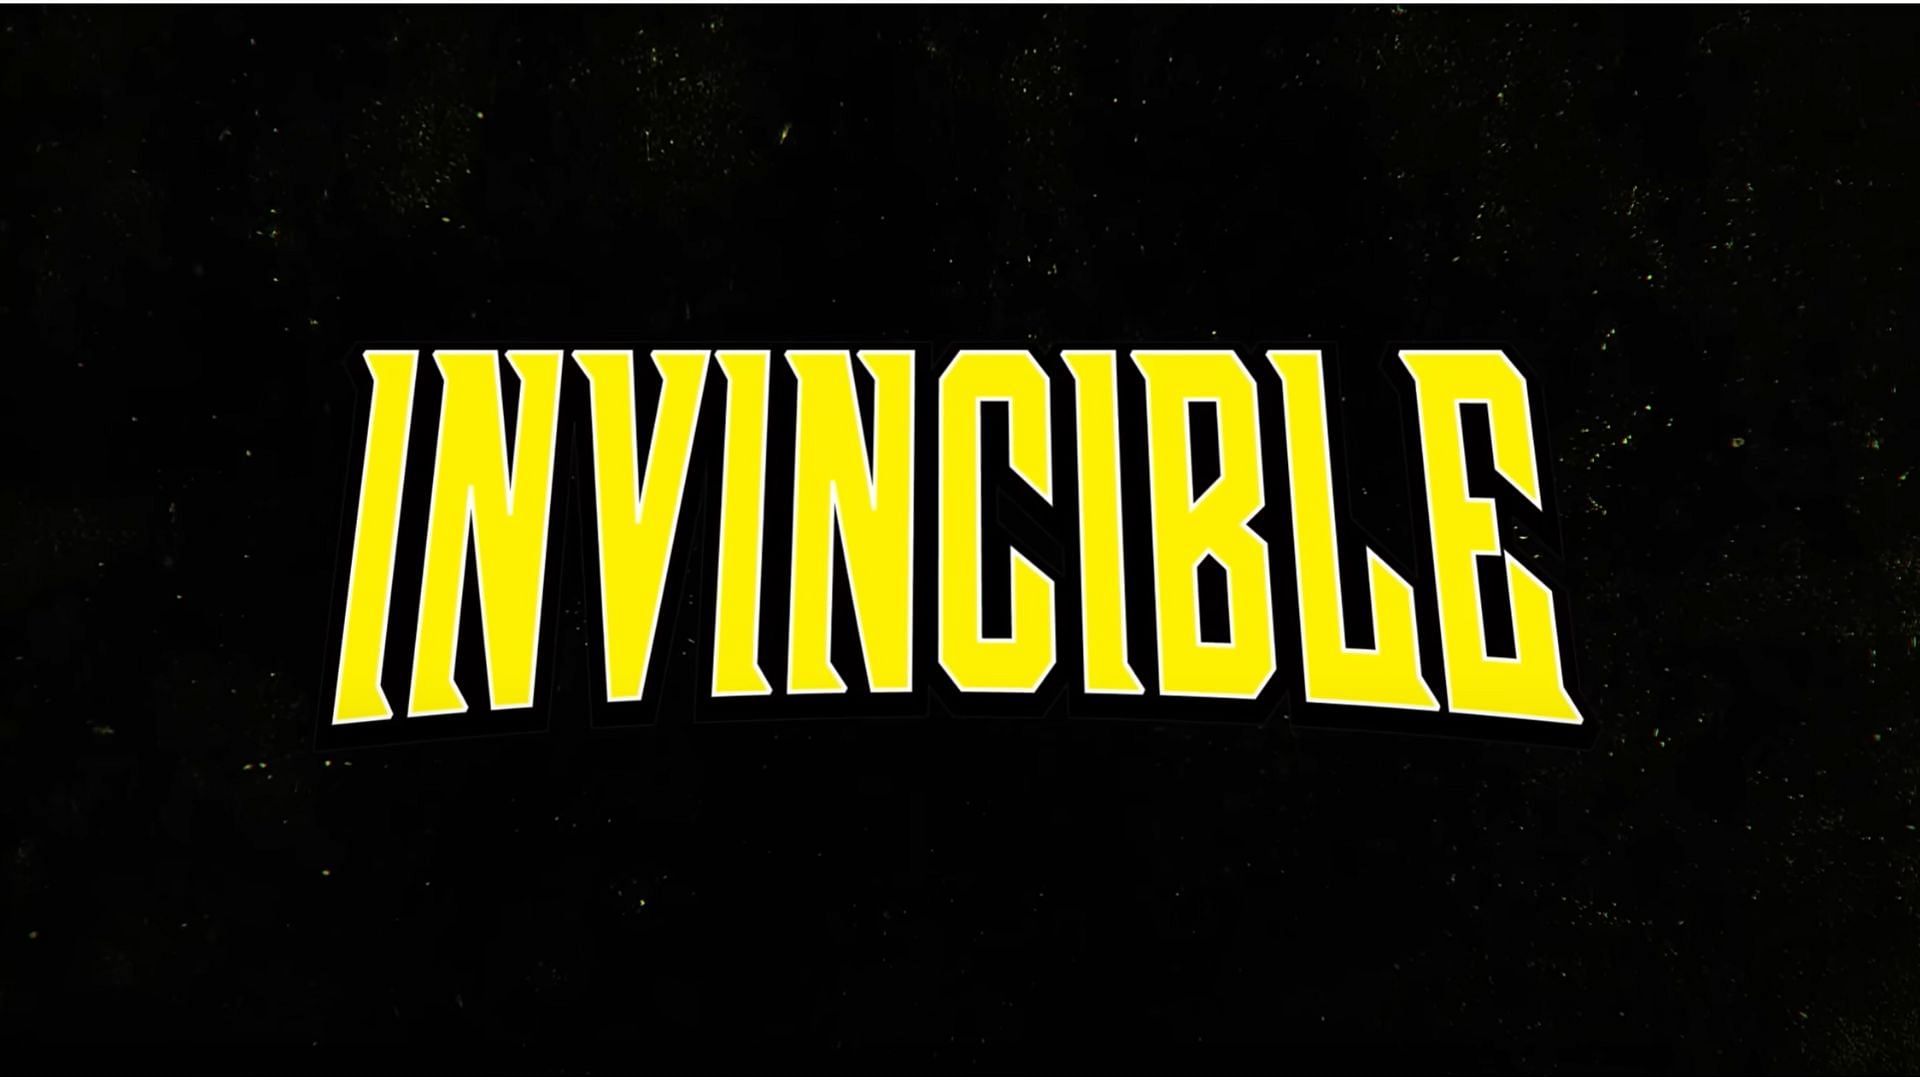 Invincible concluded its second season (Image via Prime Video)